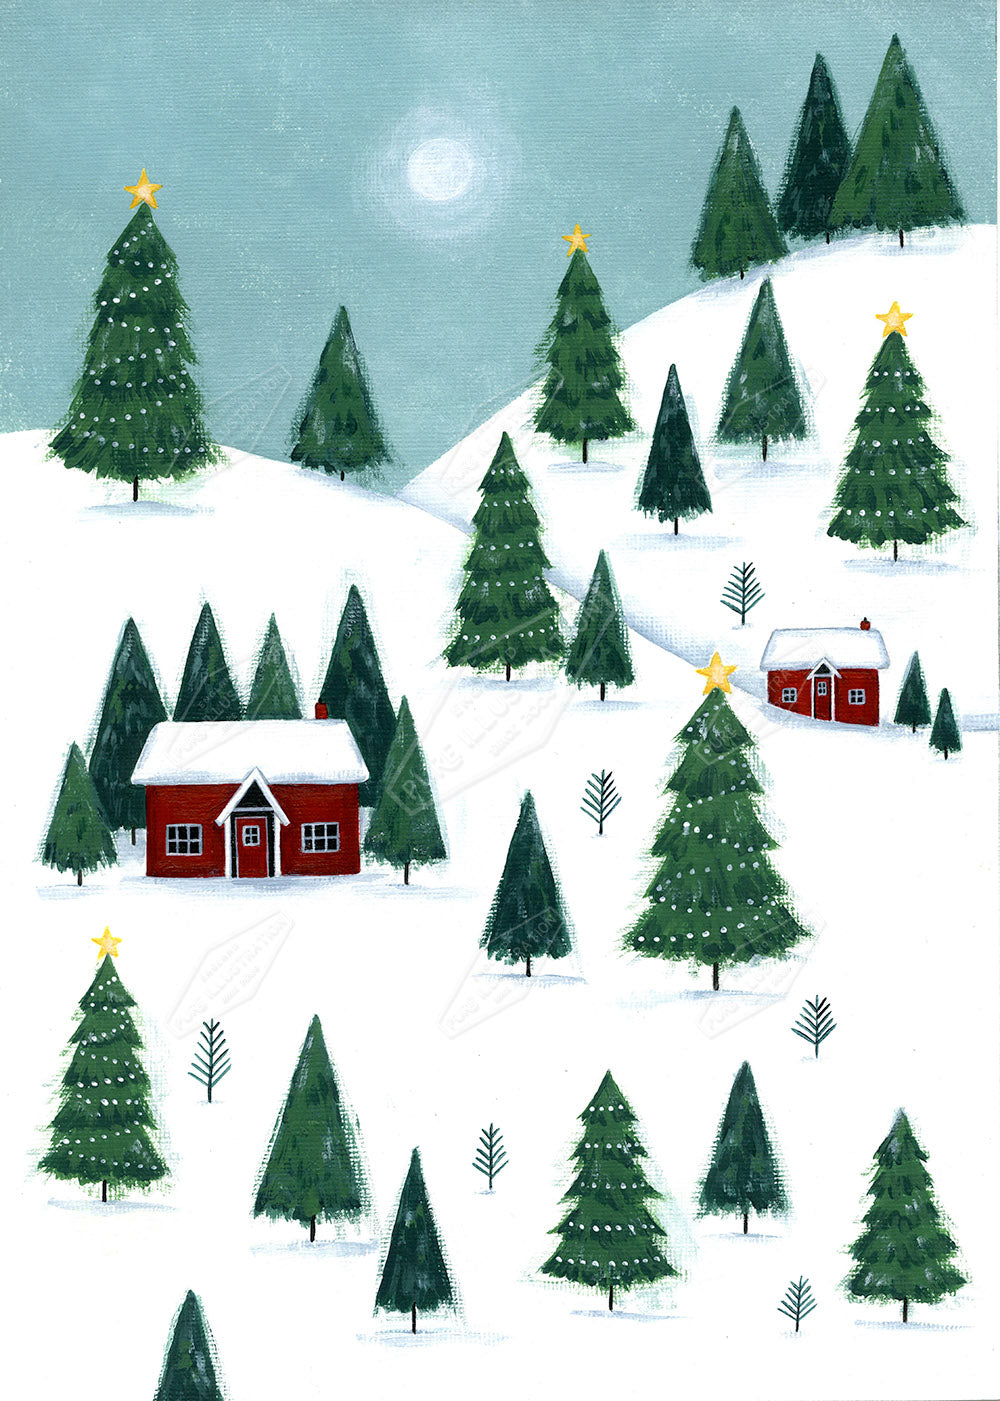 00028473AAI - Christmas Winter Scene New England by Anna Aitken - Pure Art Licensing